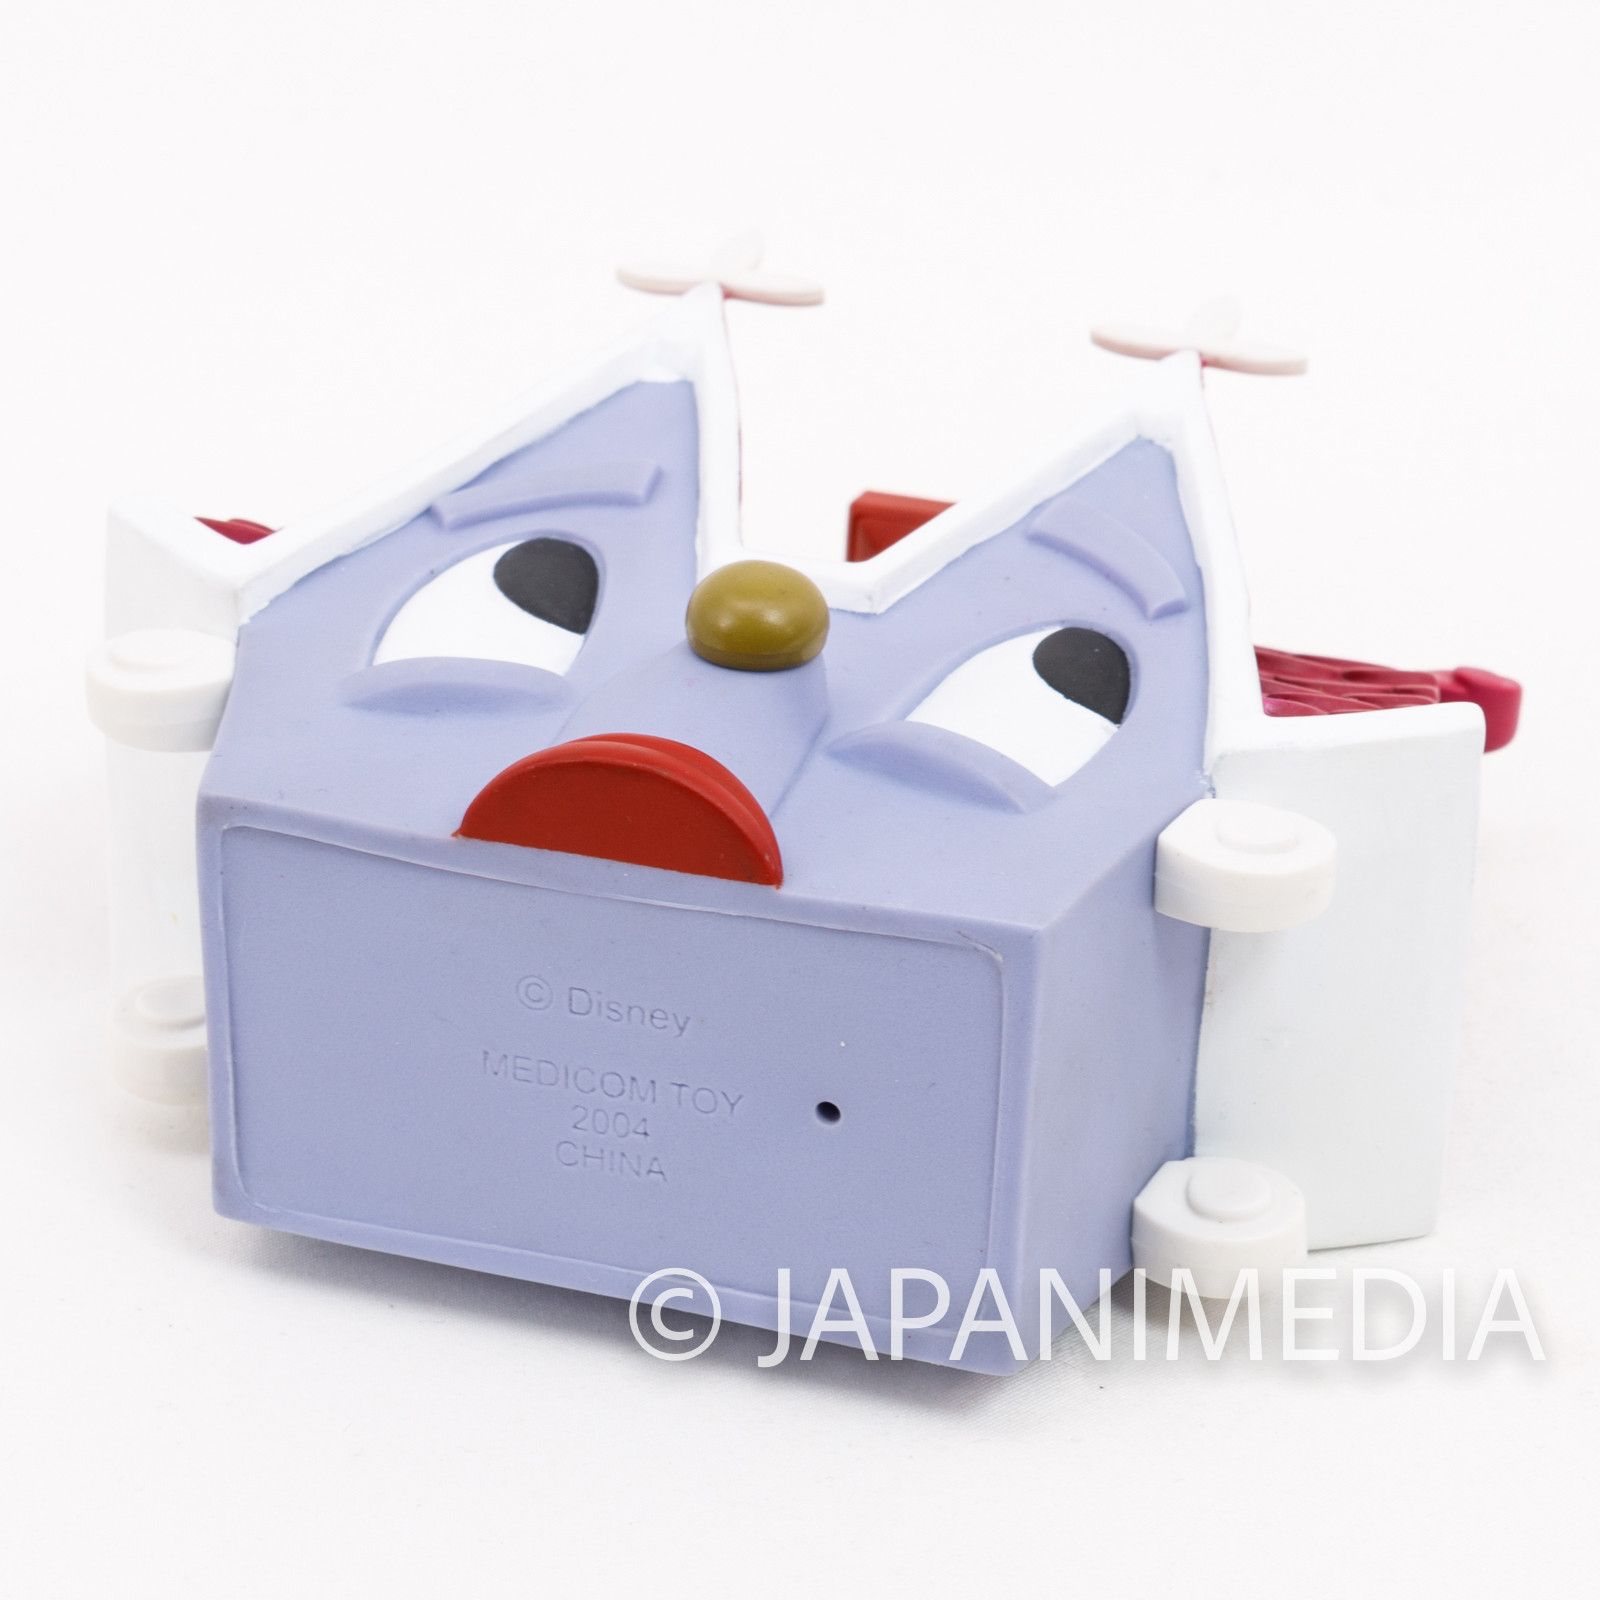 RARE! Disney Series Little House VCD Figure Medicom Toy JAPAN